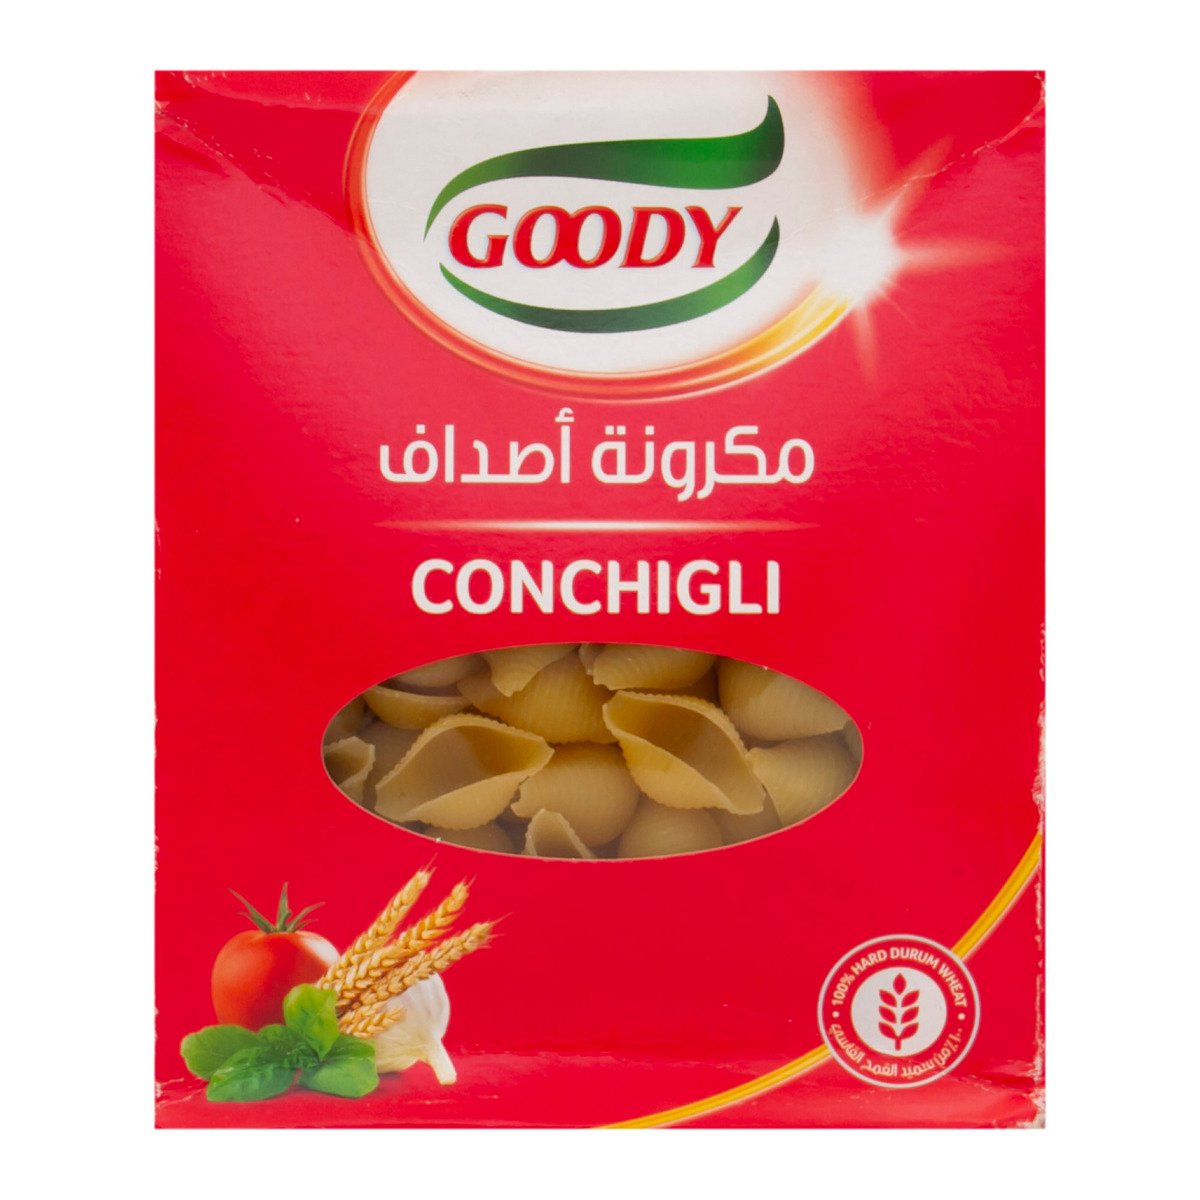 Goody Conchigli 500g